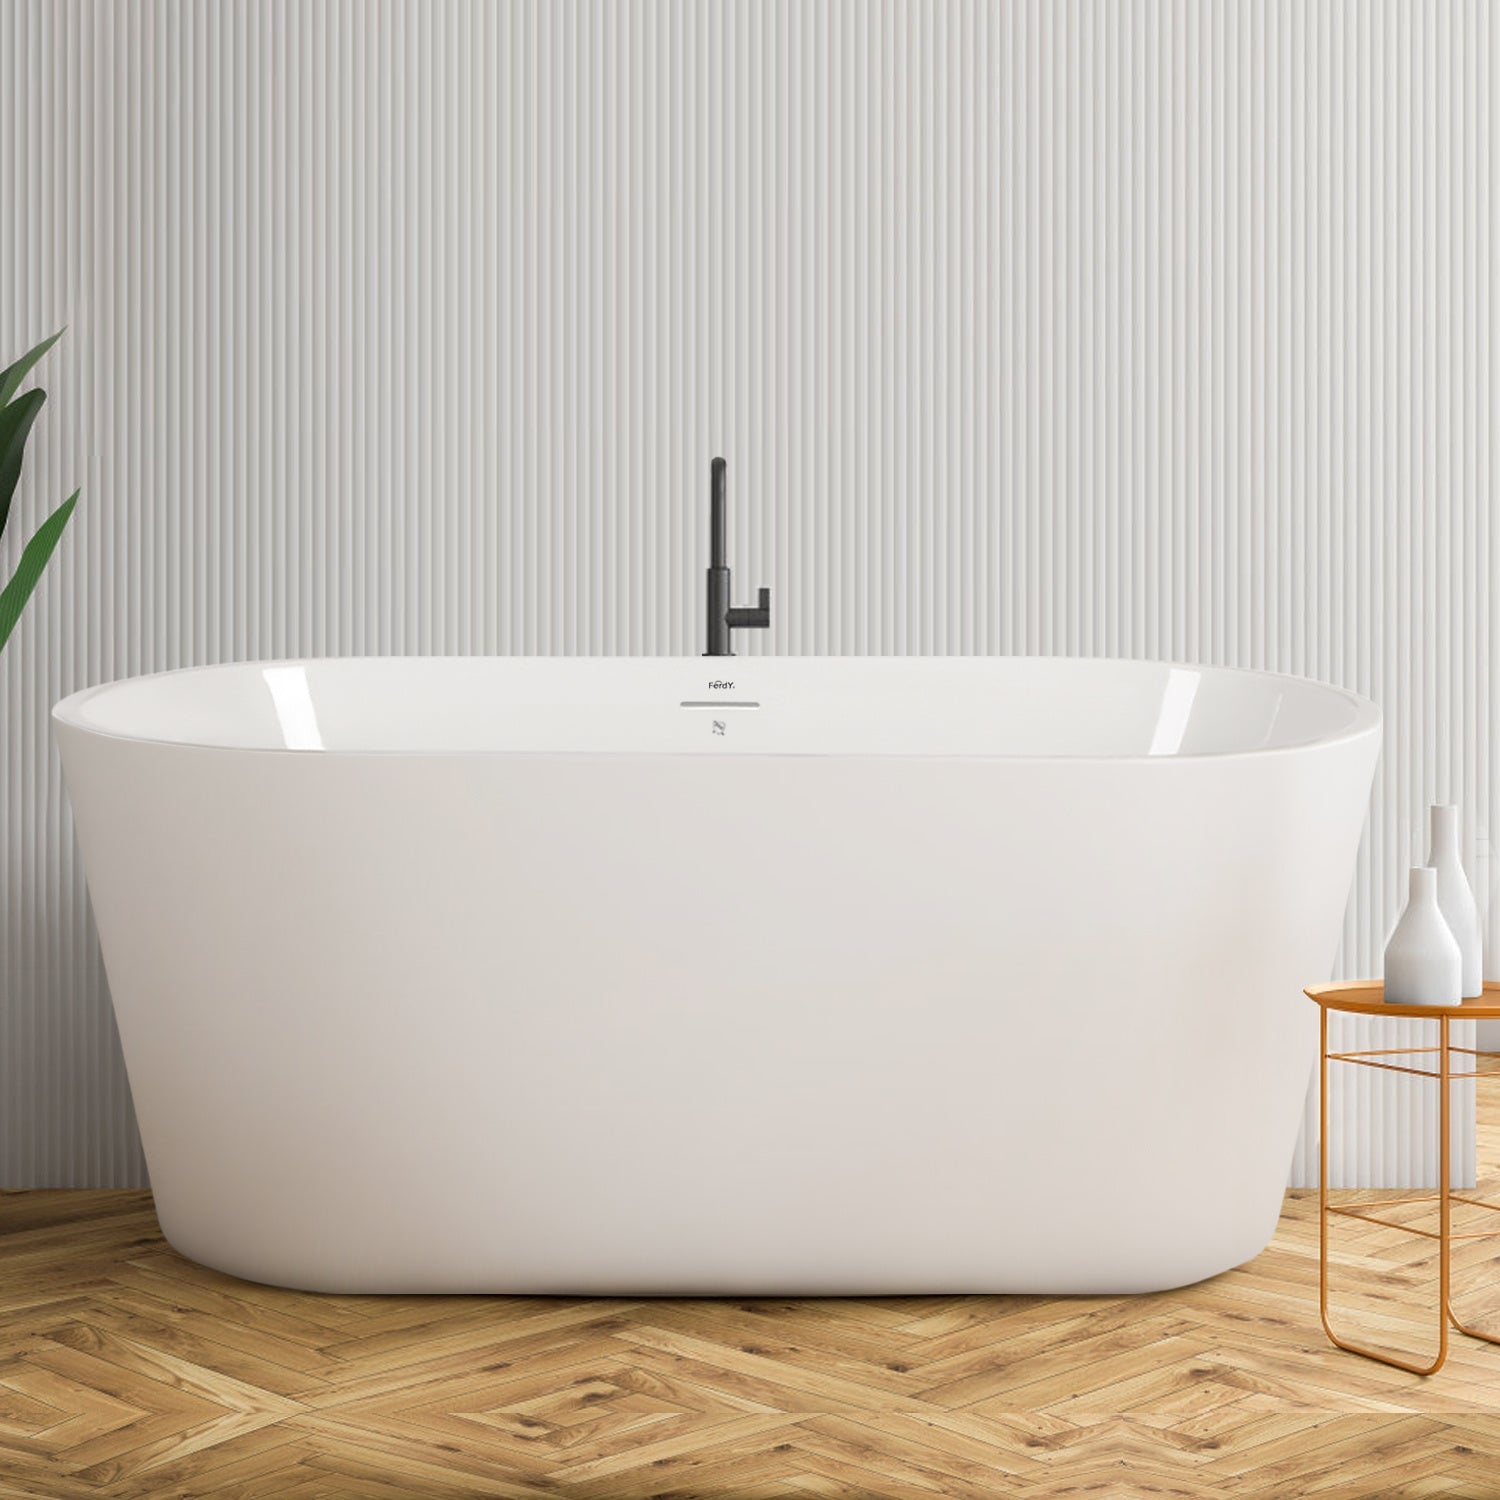 FerdY Shangri-La Acrylic Freestanding Bathtub, Small Classic Oval Shape Acrylic Soaking Bathtub with Brushed Nickel Drain & Minimalist Linear Design Overflow, Modern White, cUPC Certified - image 2 of 52